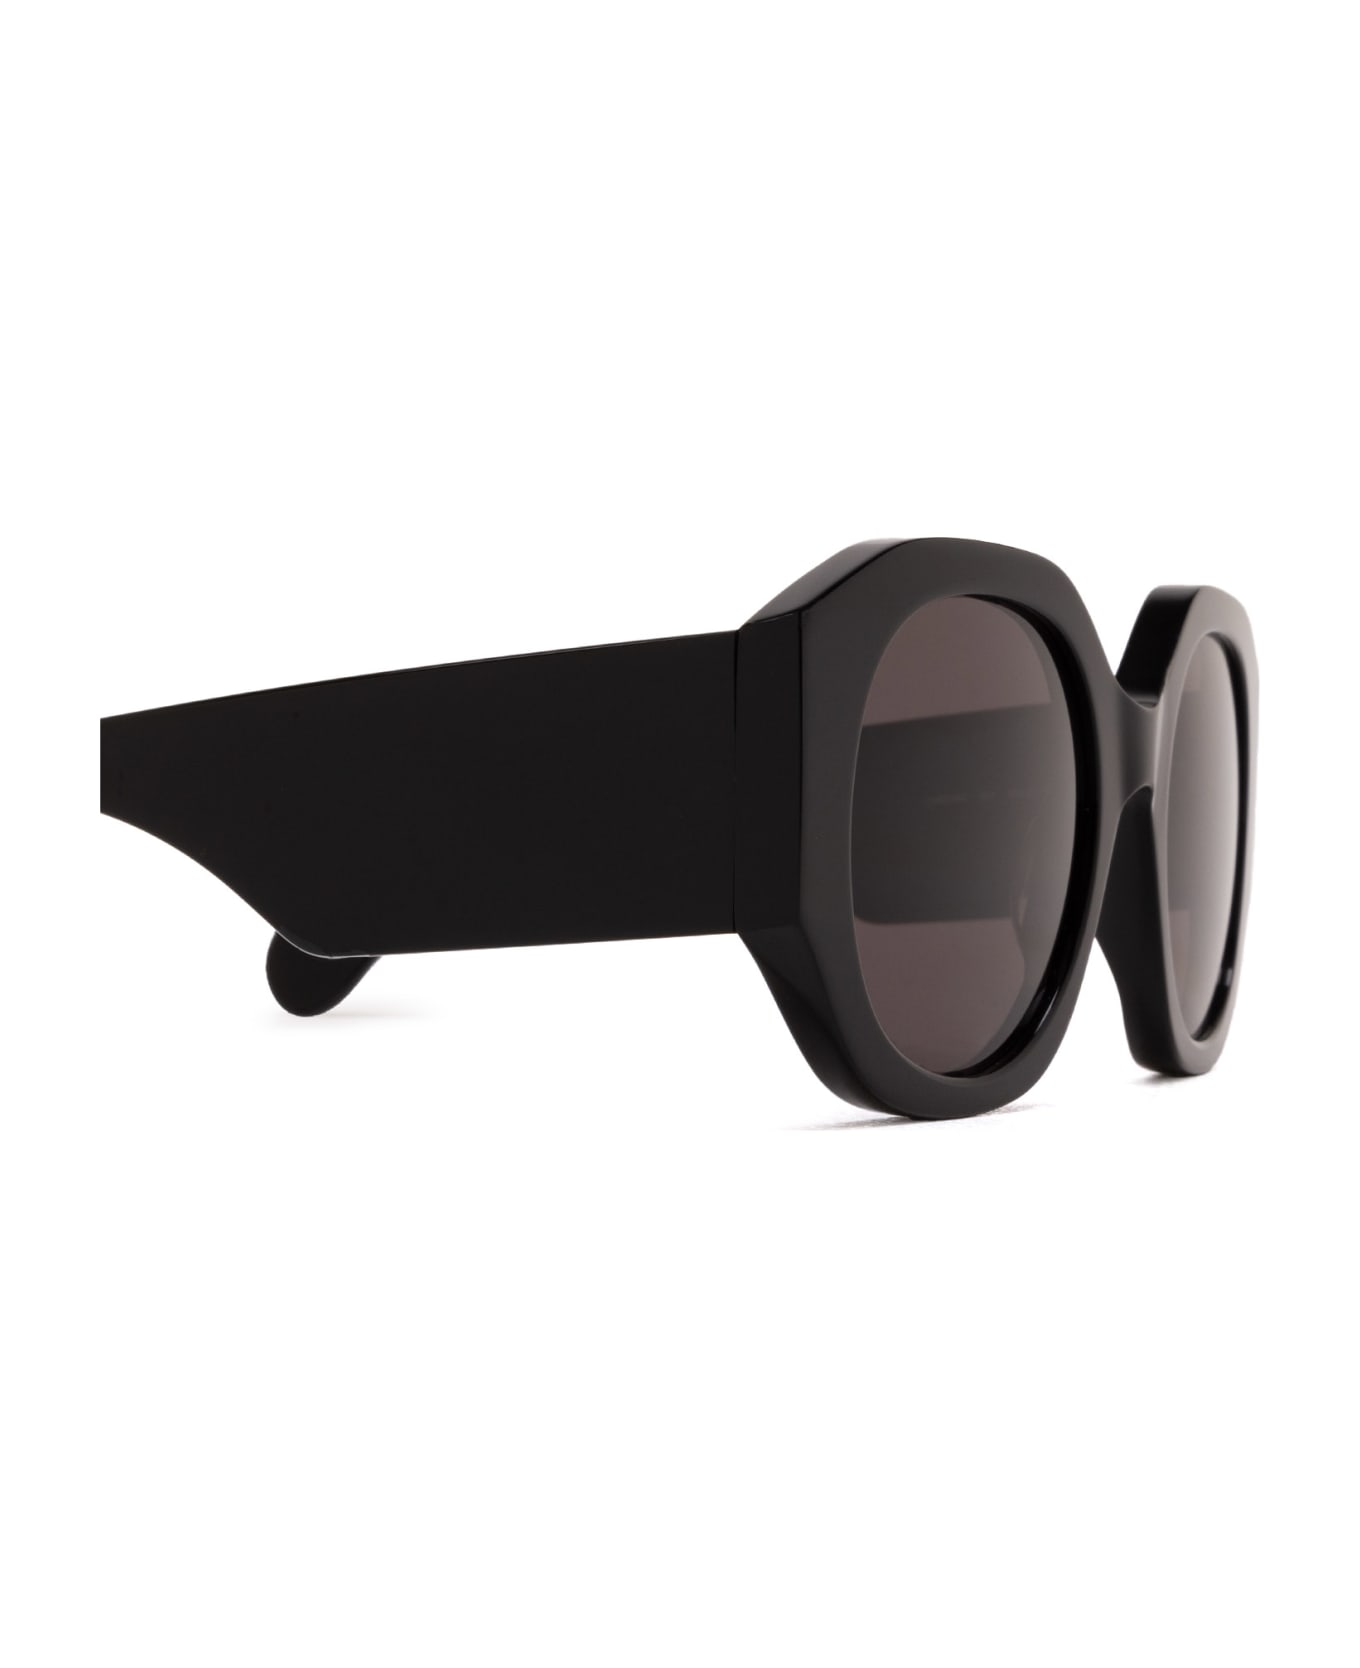 Chloé Eyewear Ch0234s Black Sunglasses - Black サングラス